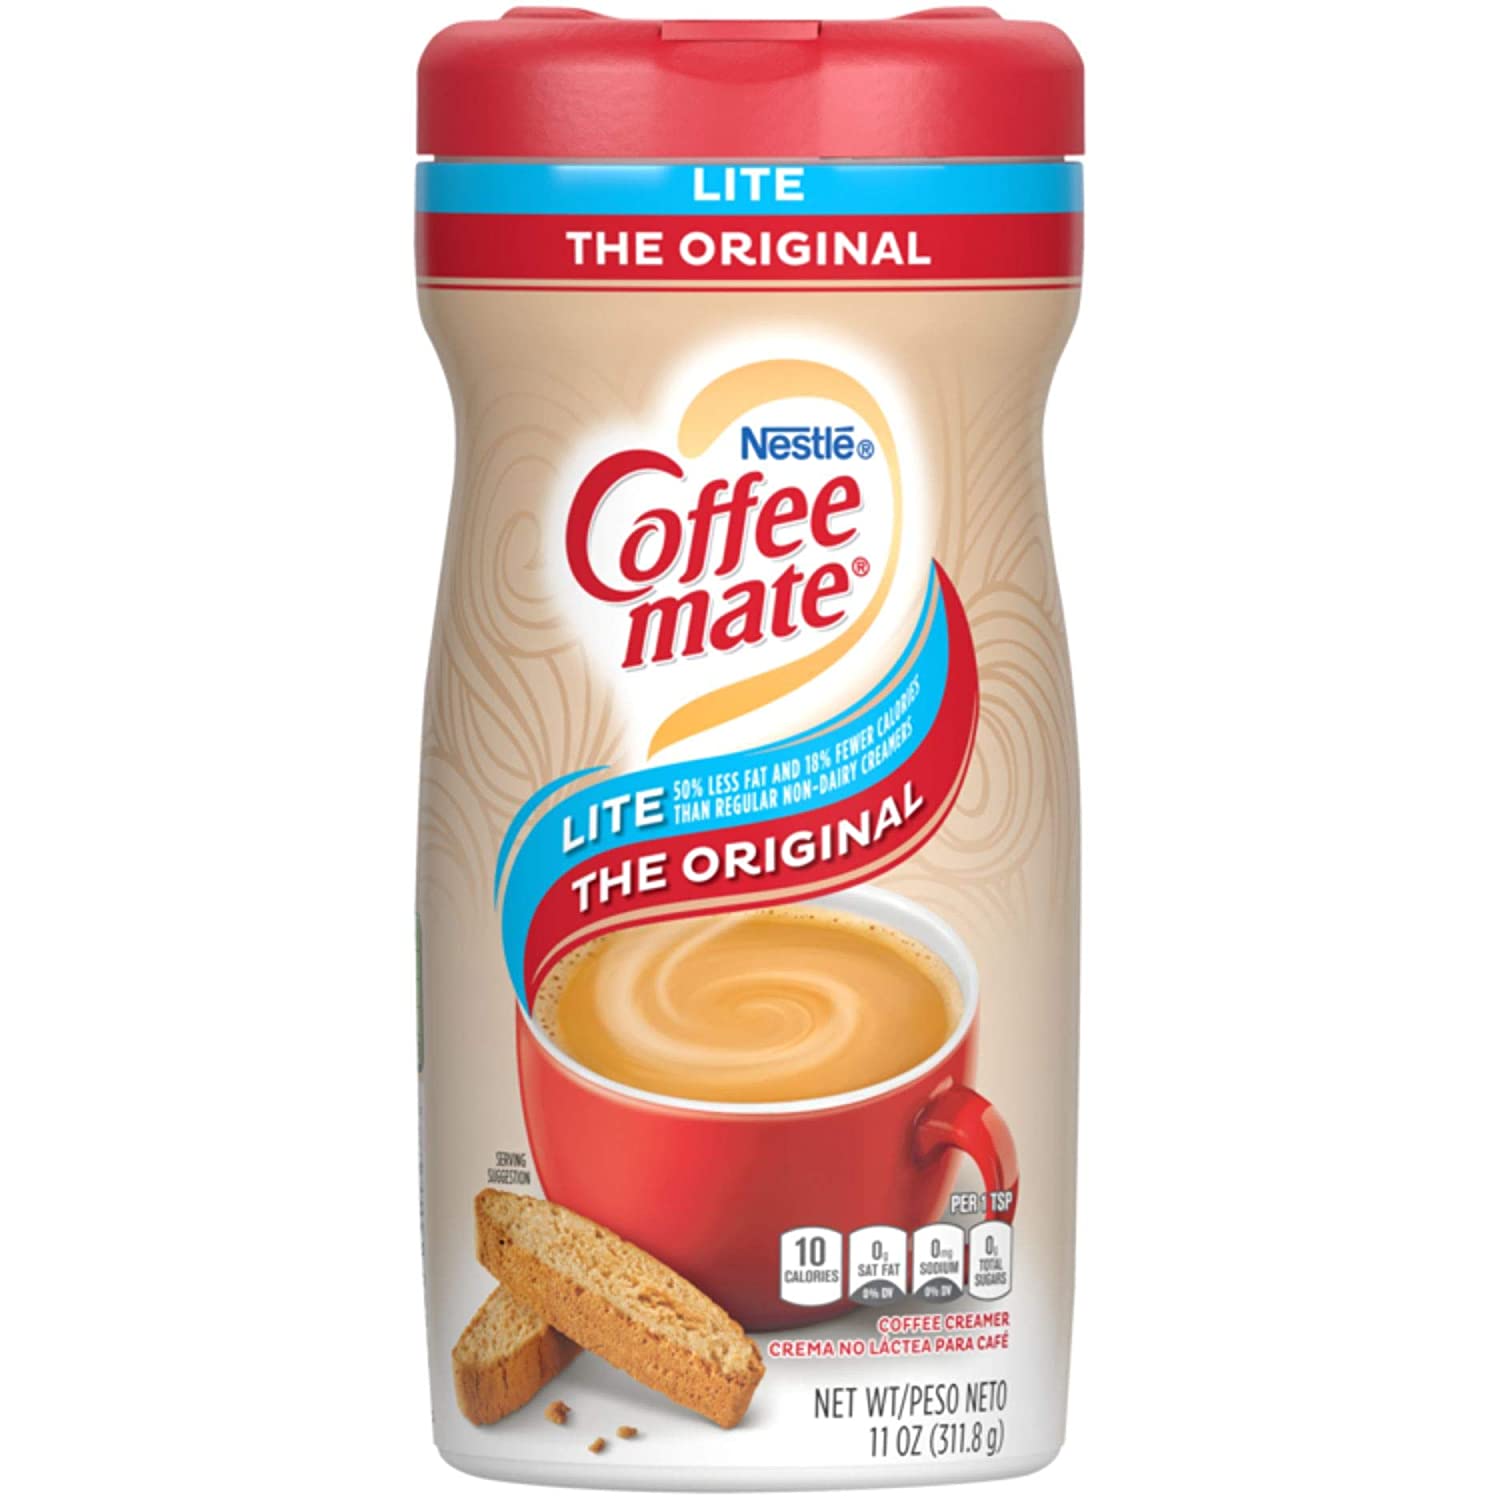 HCMBỘT KEM SỮA ÍT BÉO Coffee-mate Original Lite Powder Coffee Creamer 311g